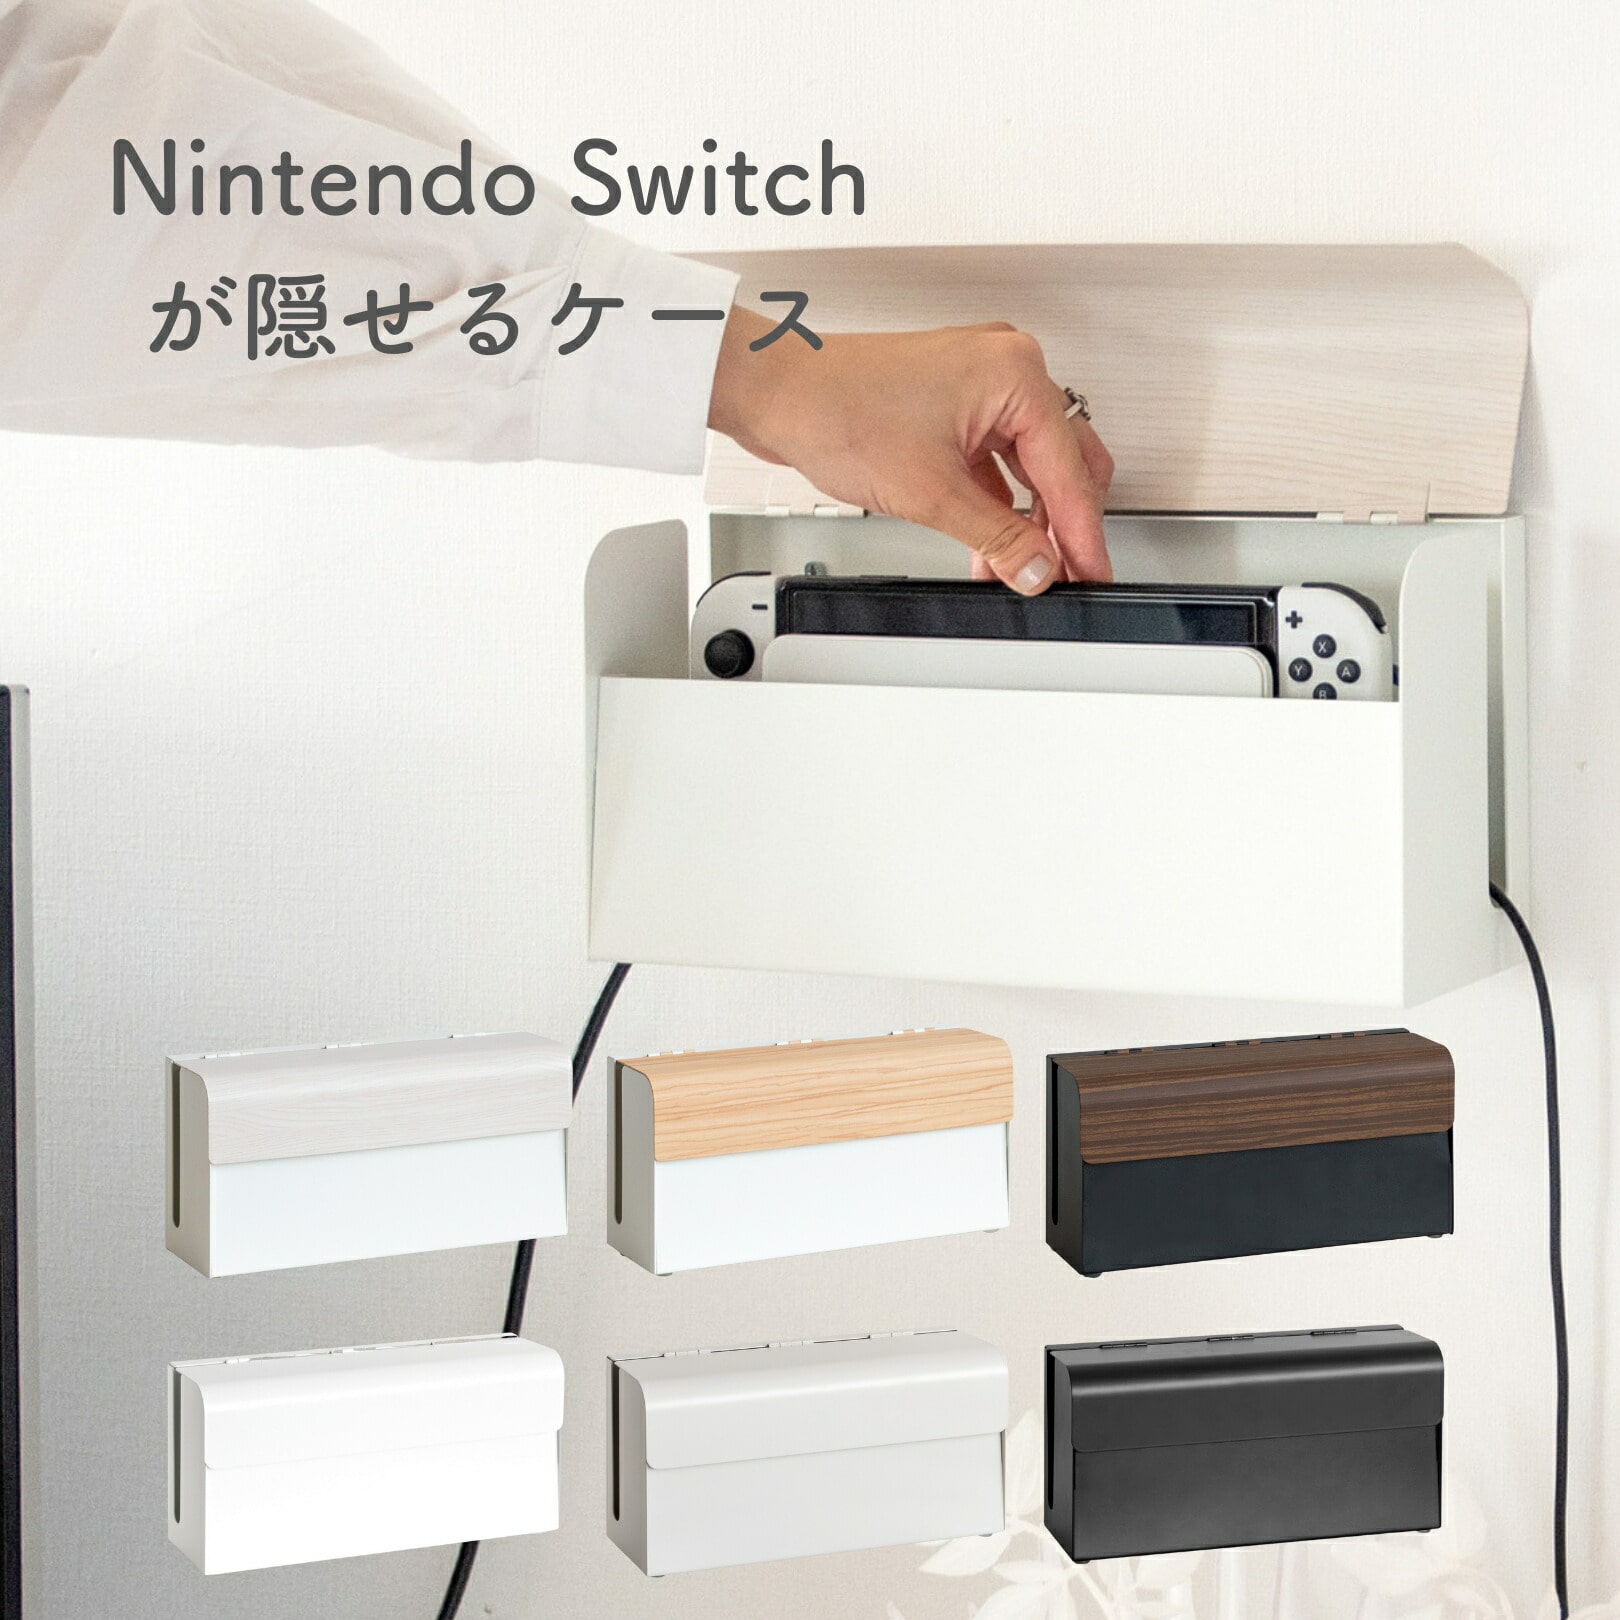 Nintendo Switch用 収納ケース 幅28 奥行9 高さ14cm 宮武製作所 | 山善ビズコム オフィス用品/家電/屋外家具の通販 山善公式